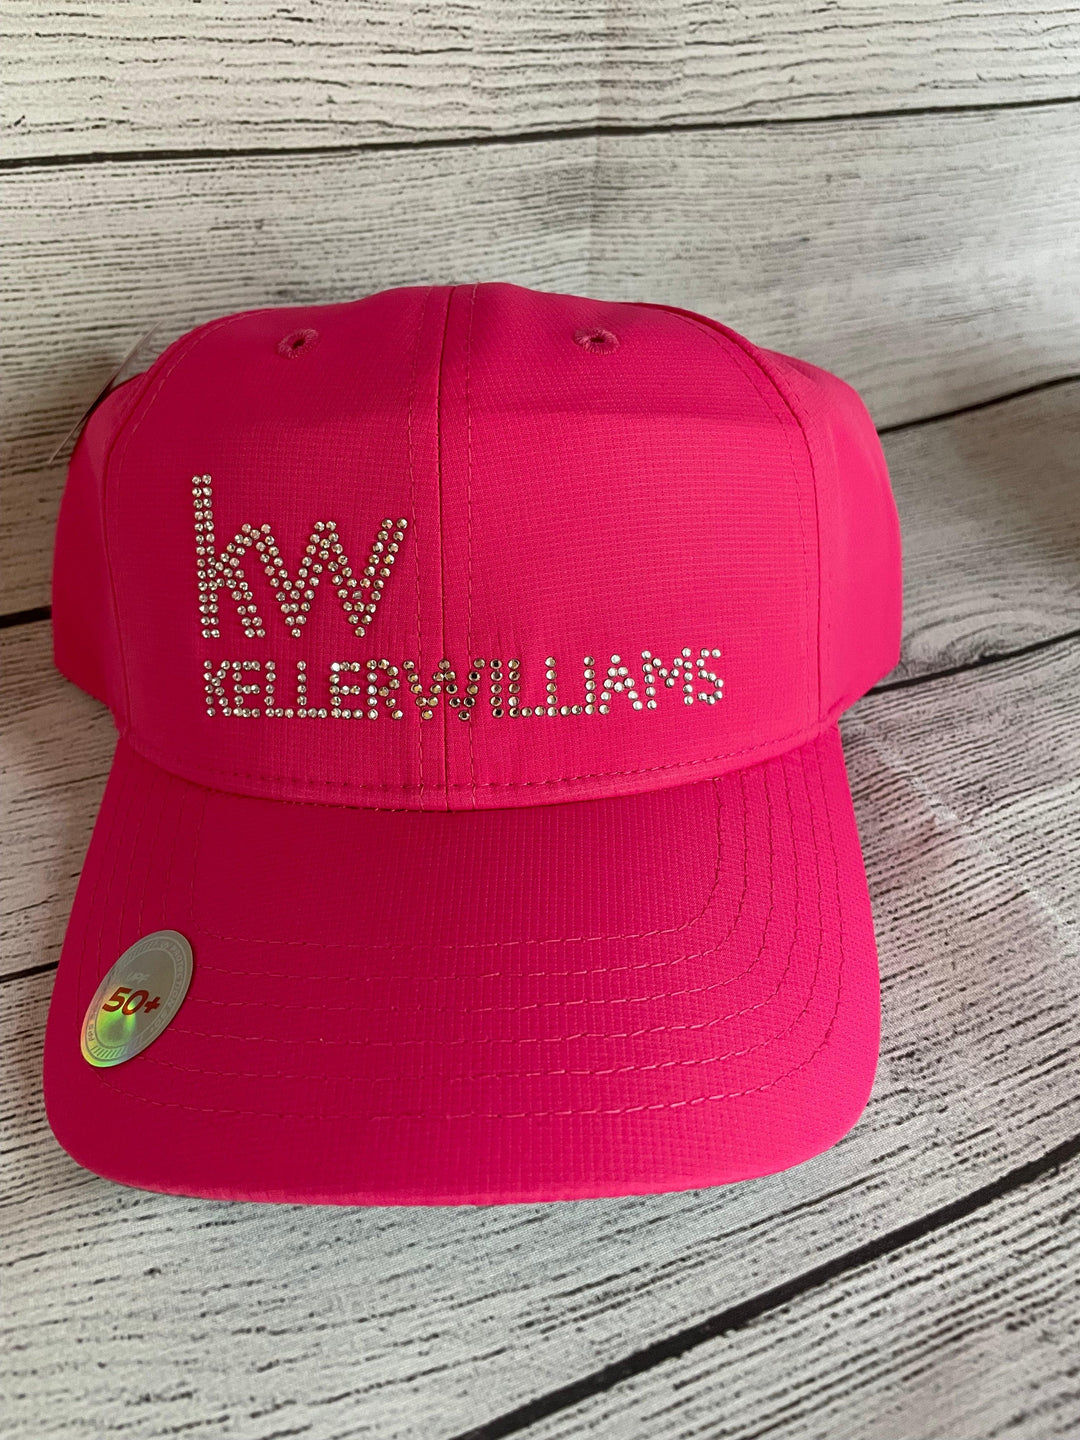 Keller Williams KW-FH354 Nylon Performance Ladies Rhinestone Cap w/Bling logo & Capper Option 